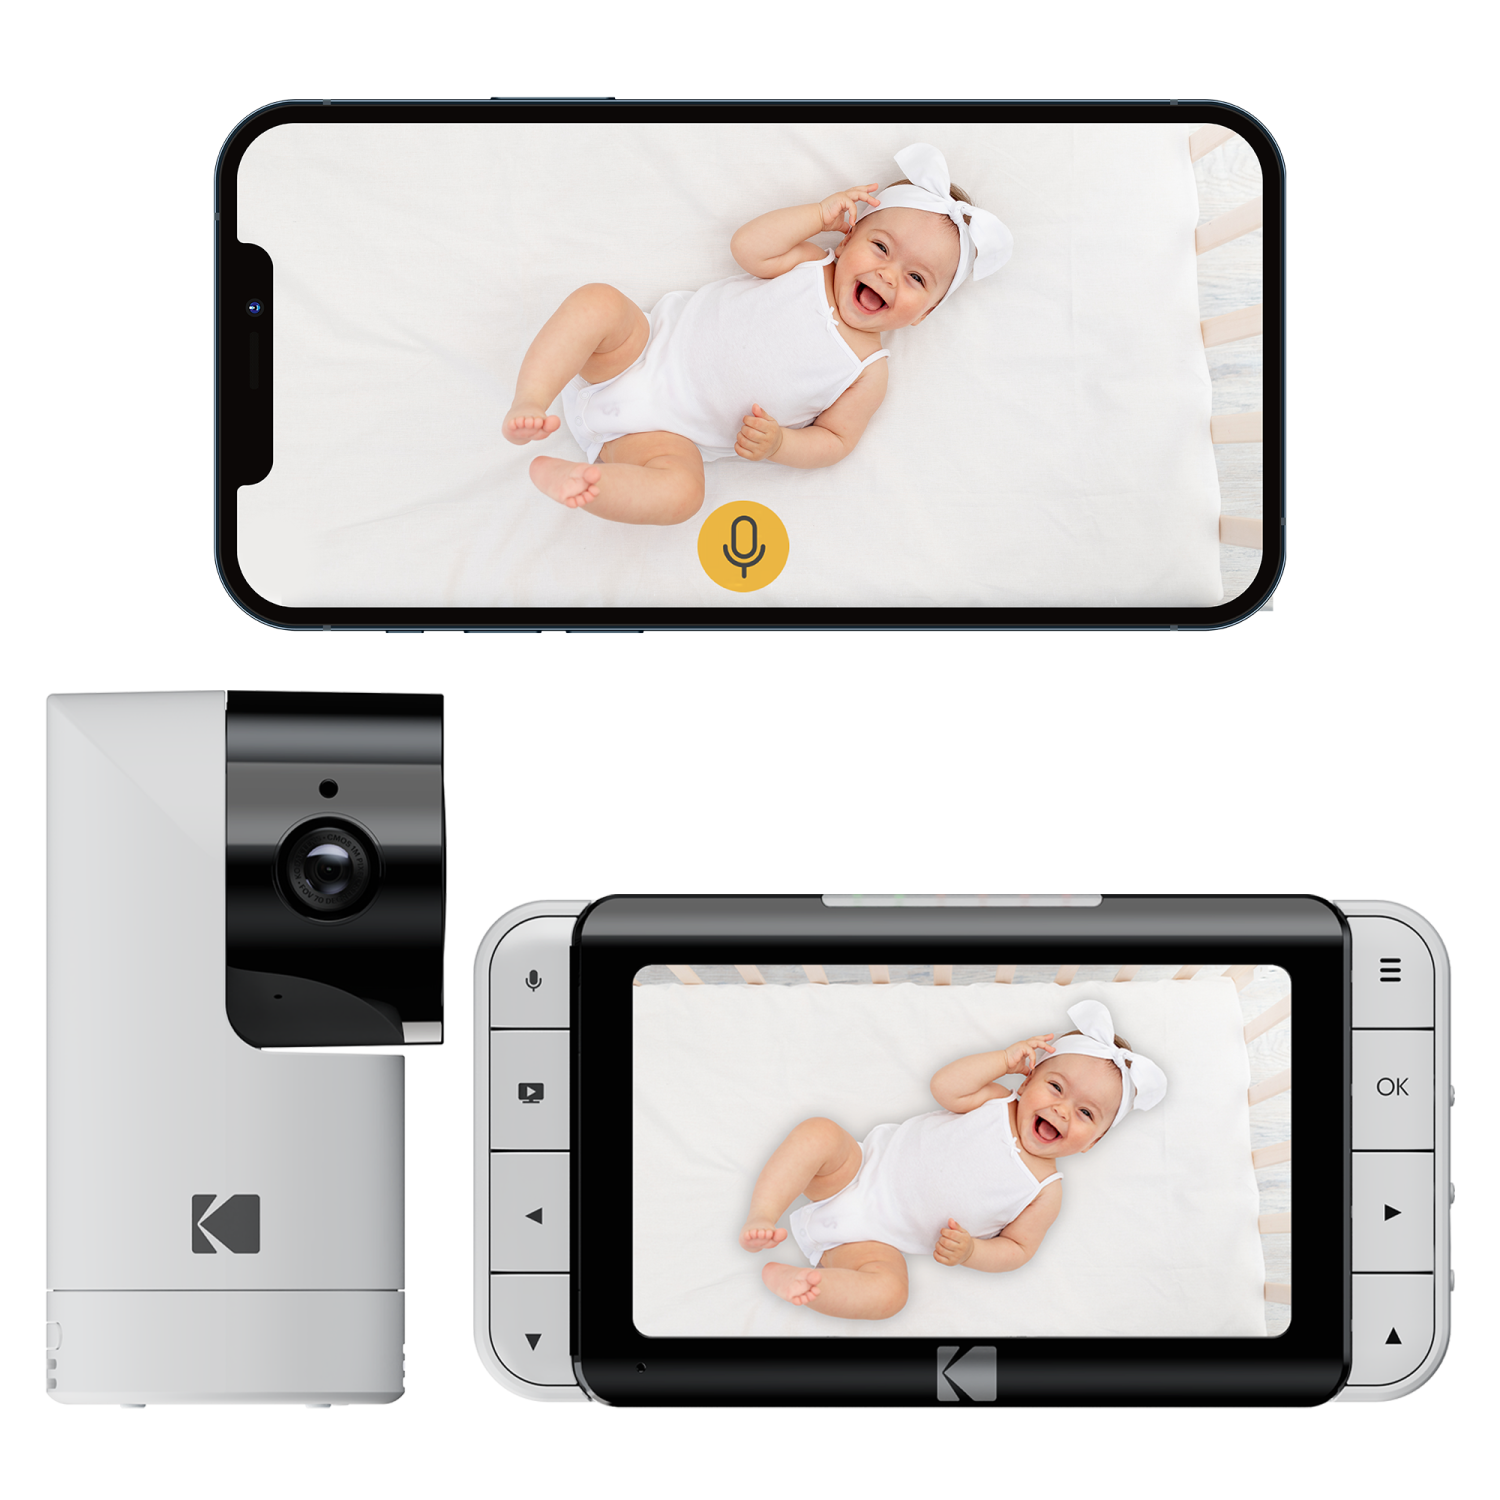 Kodak Cherish 5" WiFi Video Baby Monitor with Long Range, Night Vision, and Two Way Communication (C525P) – White